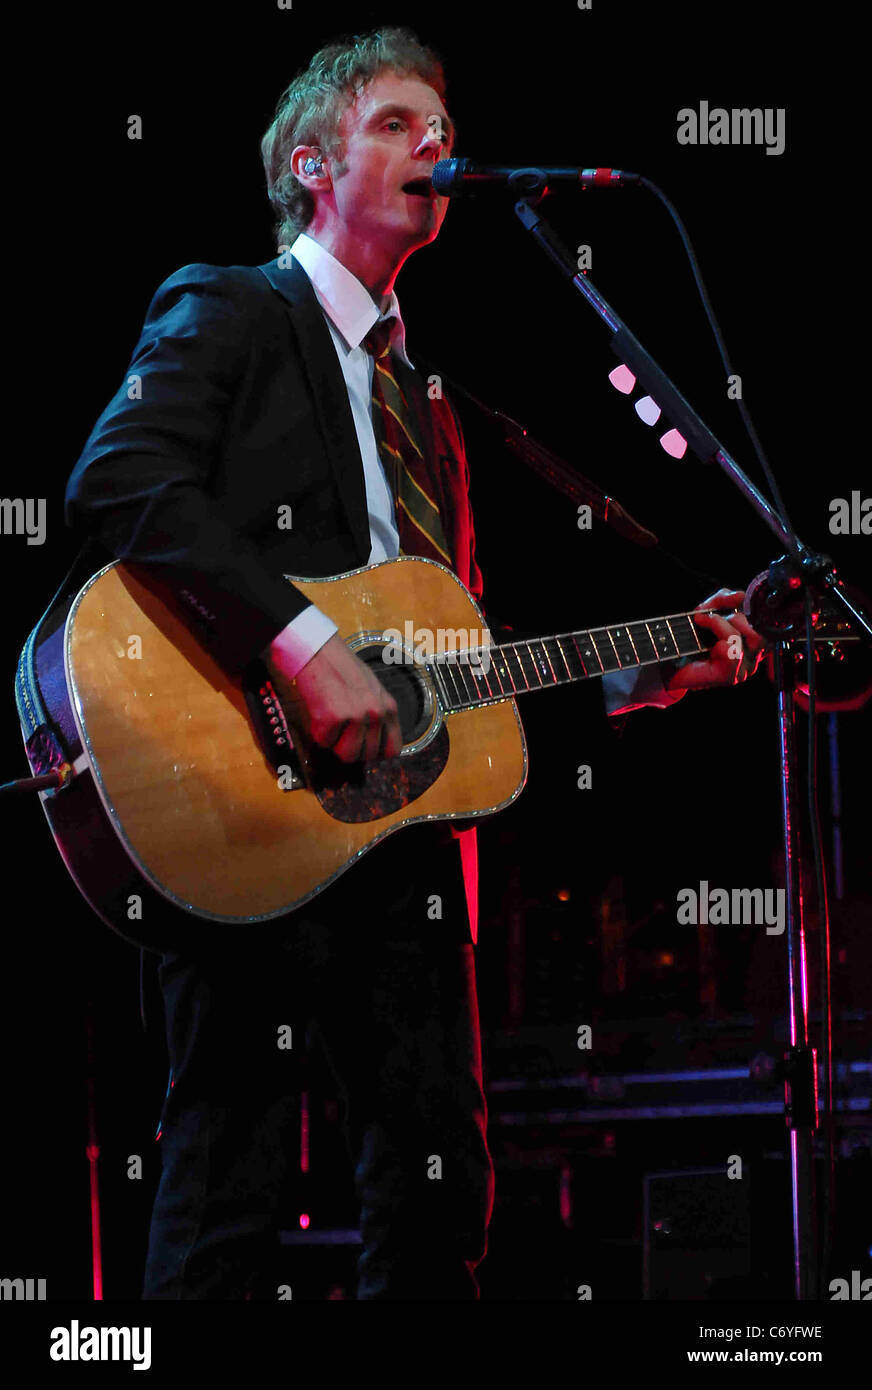 Paul Waaktaar-Savoy a-ha performing live in Sao Paulo Sao Paulo, Brazil -  10.03.10 Stock Photo - Alamy